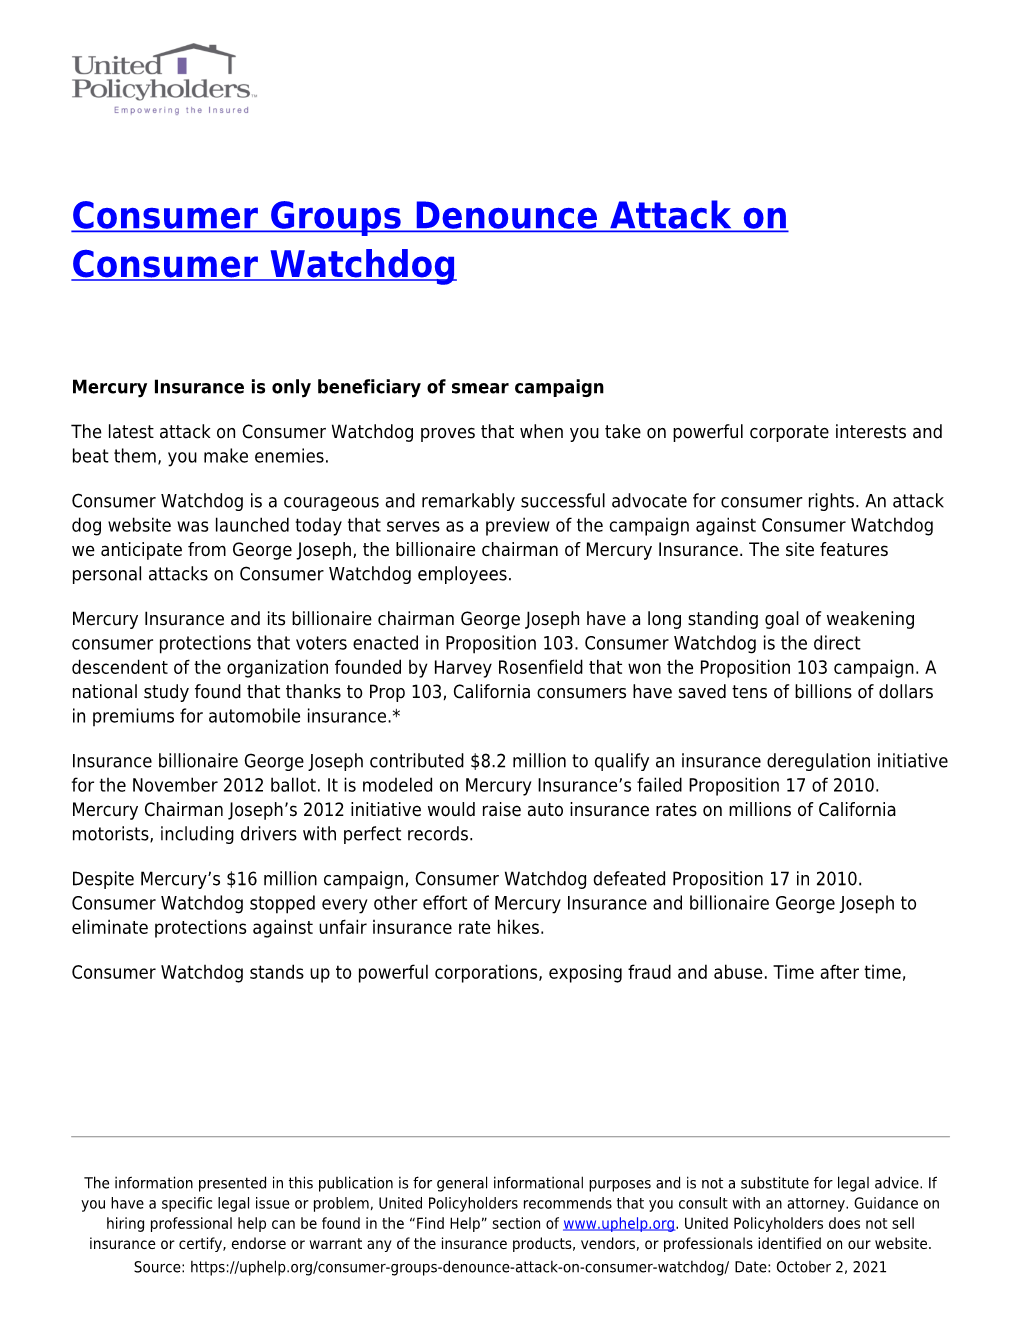 Consumer Groups Denounce Attack on Consumer Watchdog